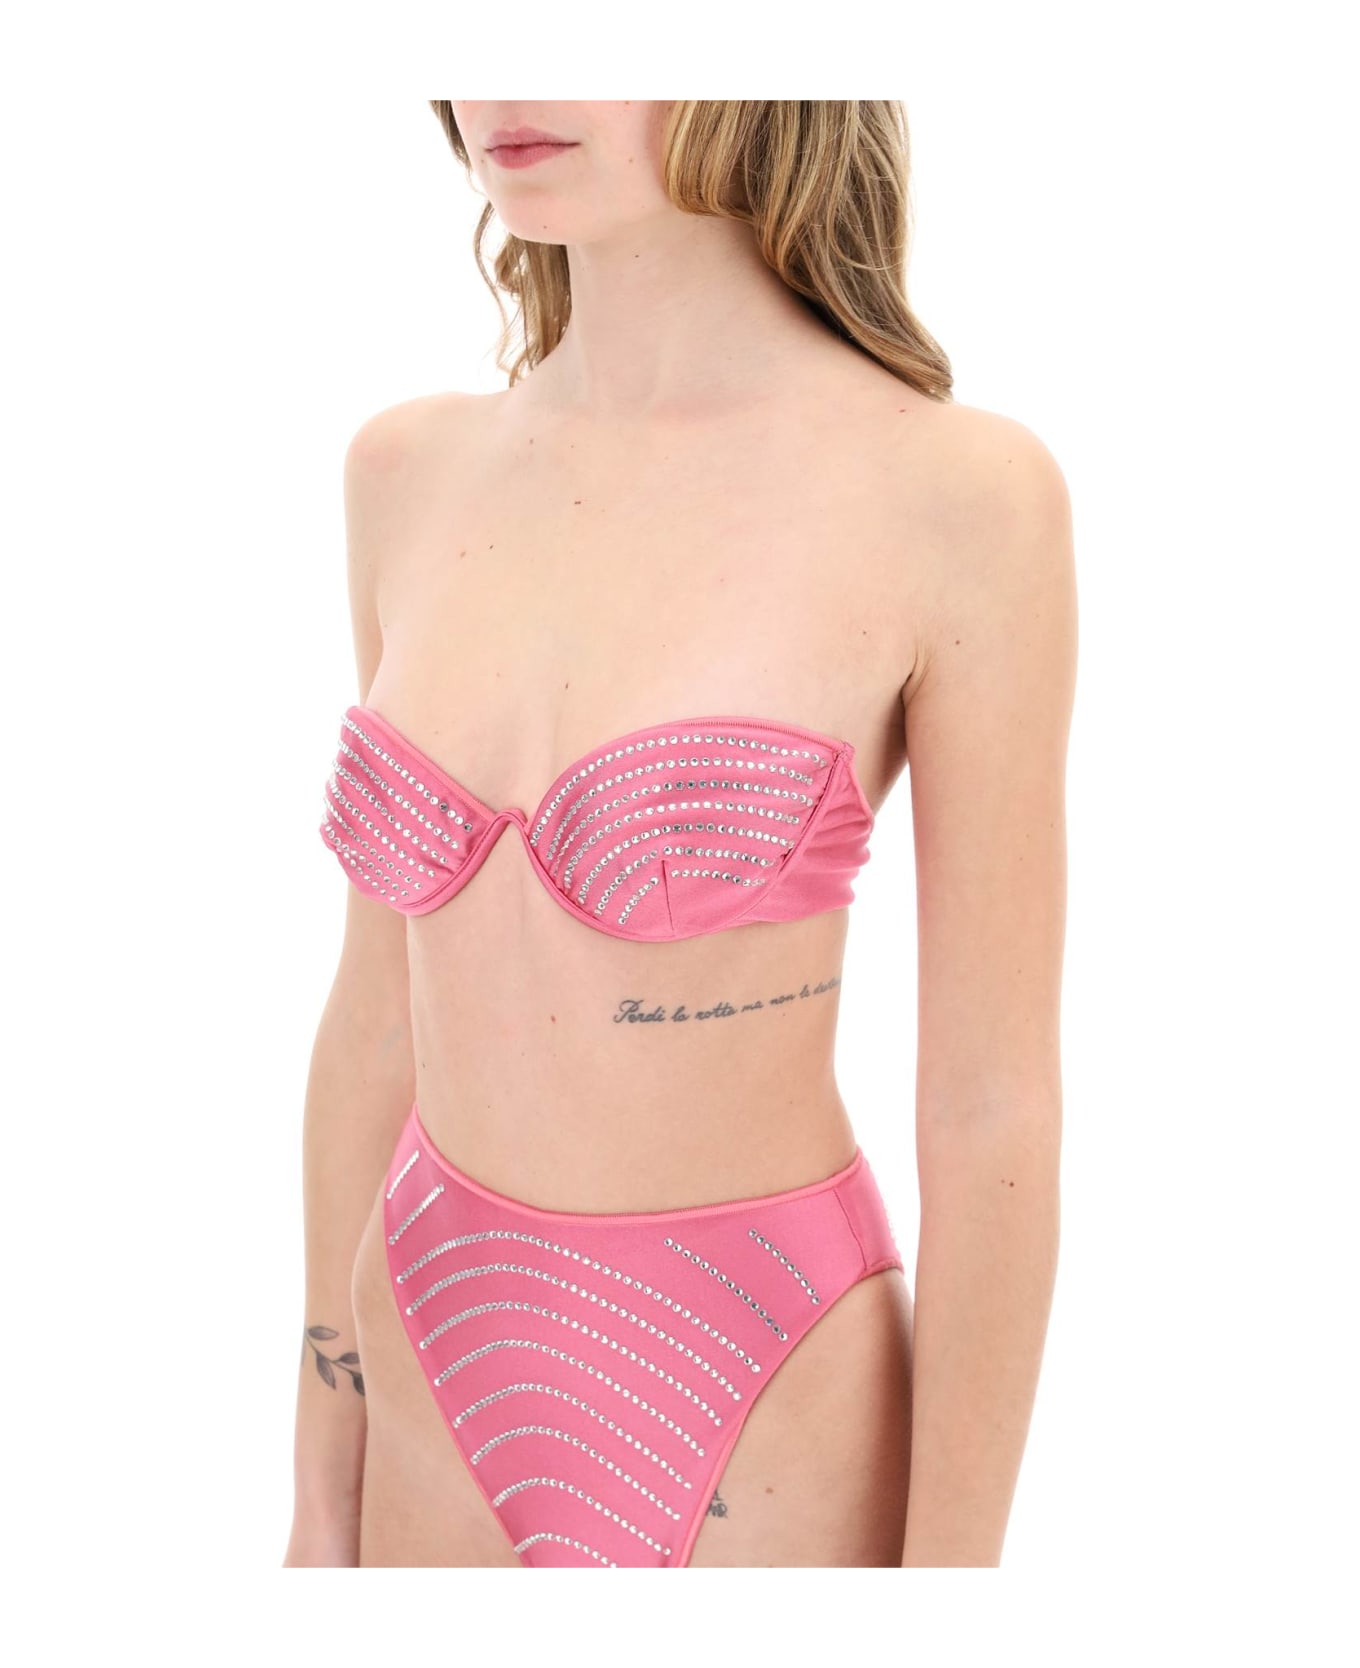 Oseree Bikini Set With Rhinestones - FLAMINGO (Fuchsia)